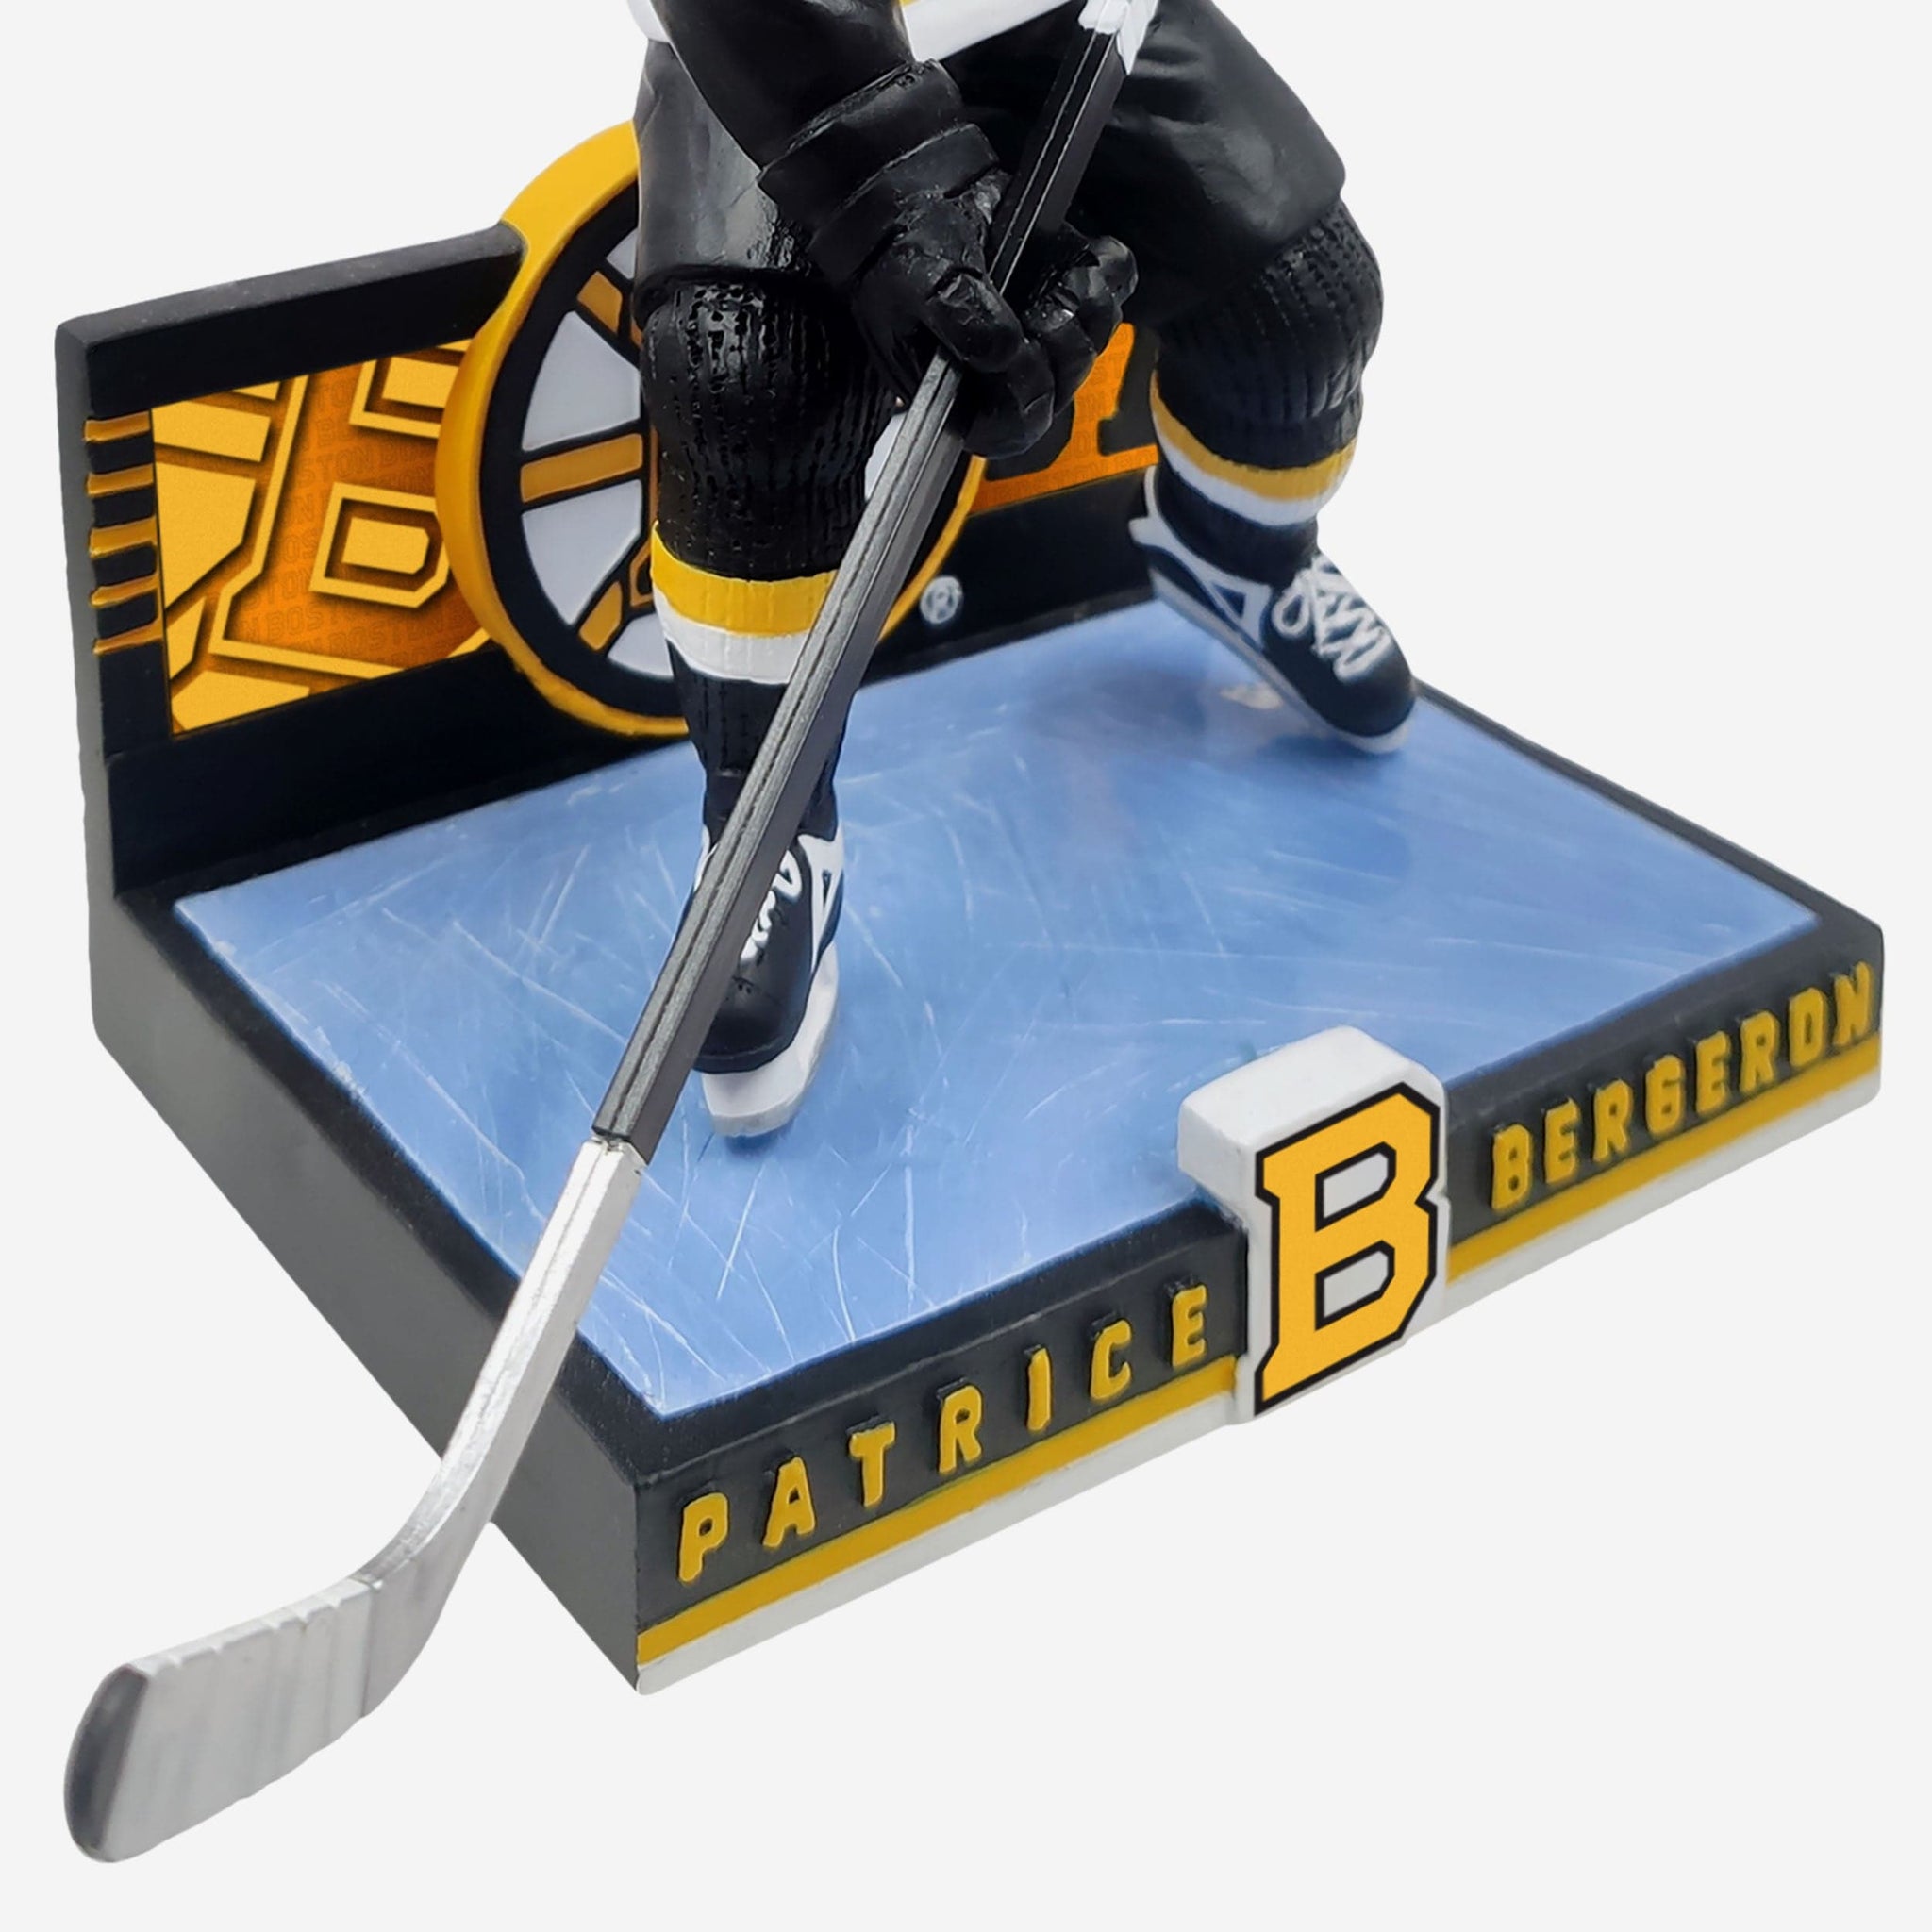 Patrice Bergeron Boston Bruins Alternate Jersey Bobblehead NHL